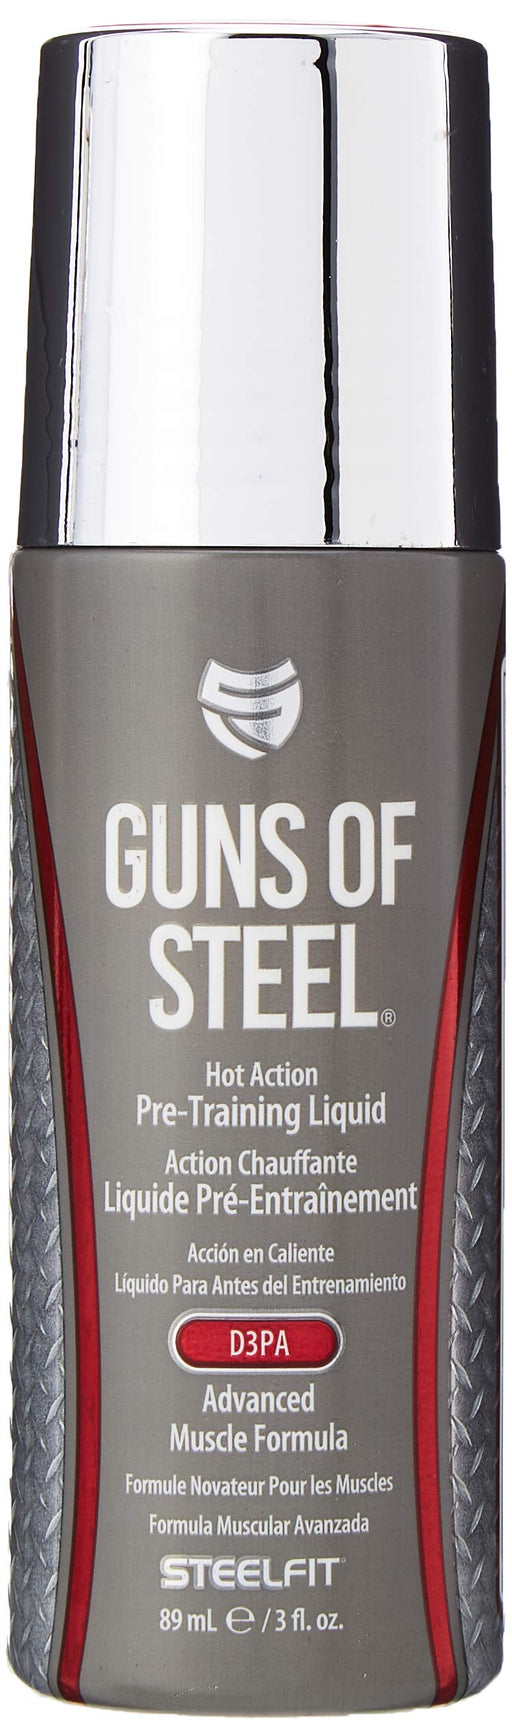 Pro Tan Guns of Steel, Hot Action Pre-Training Liquid - 89 ml. | High-Quality Accessories | MySupplementShop.co.uk